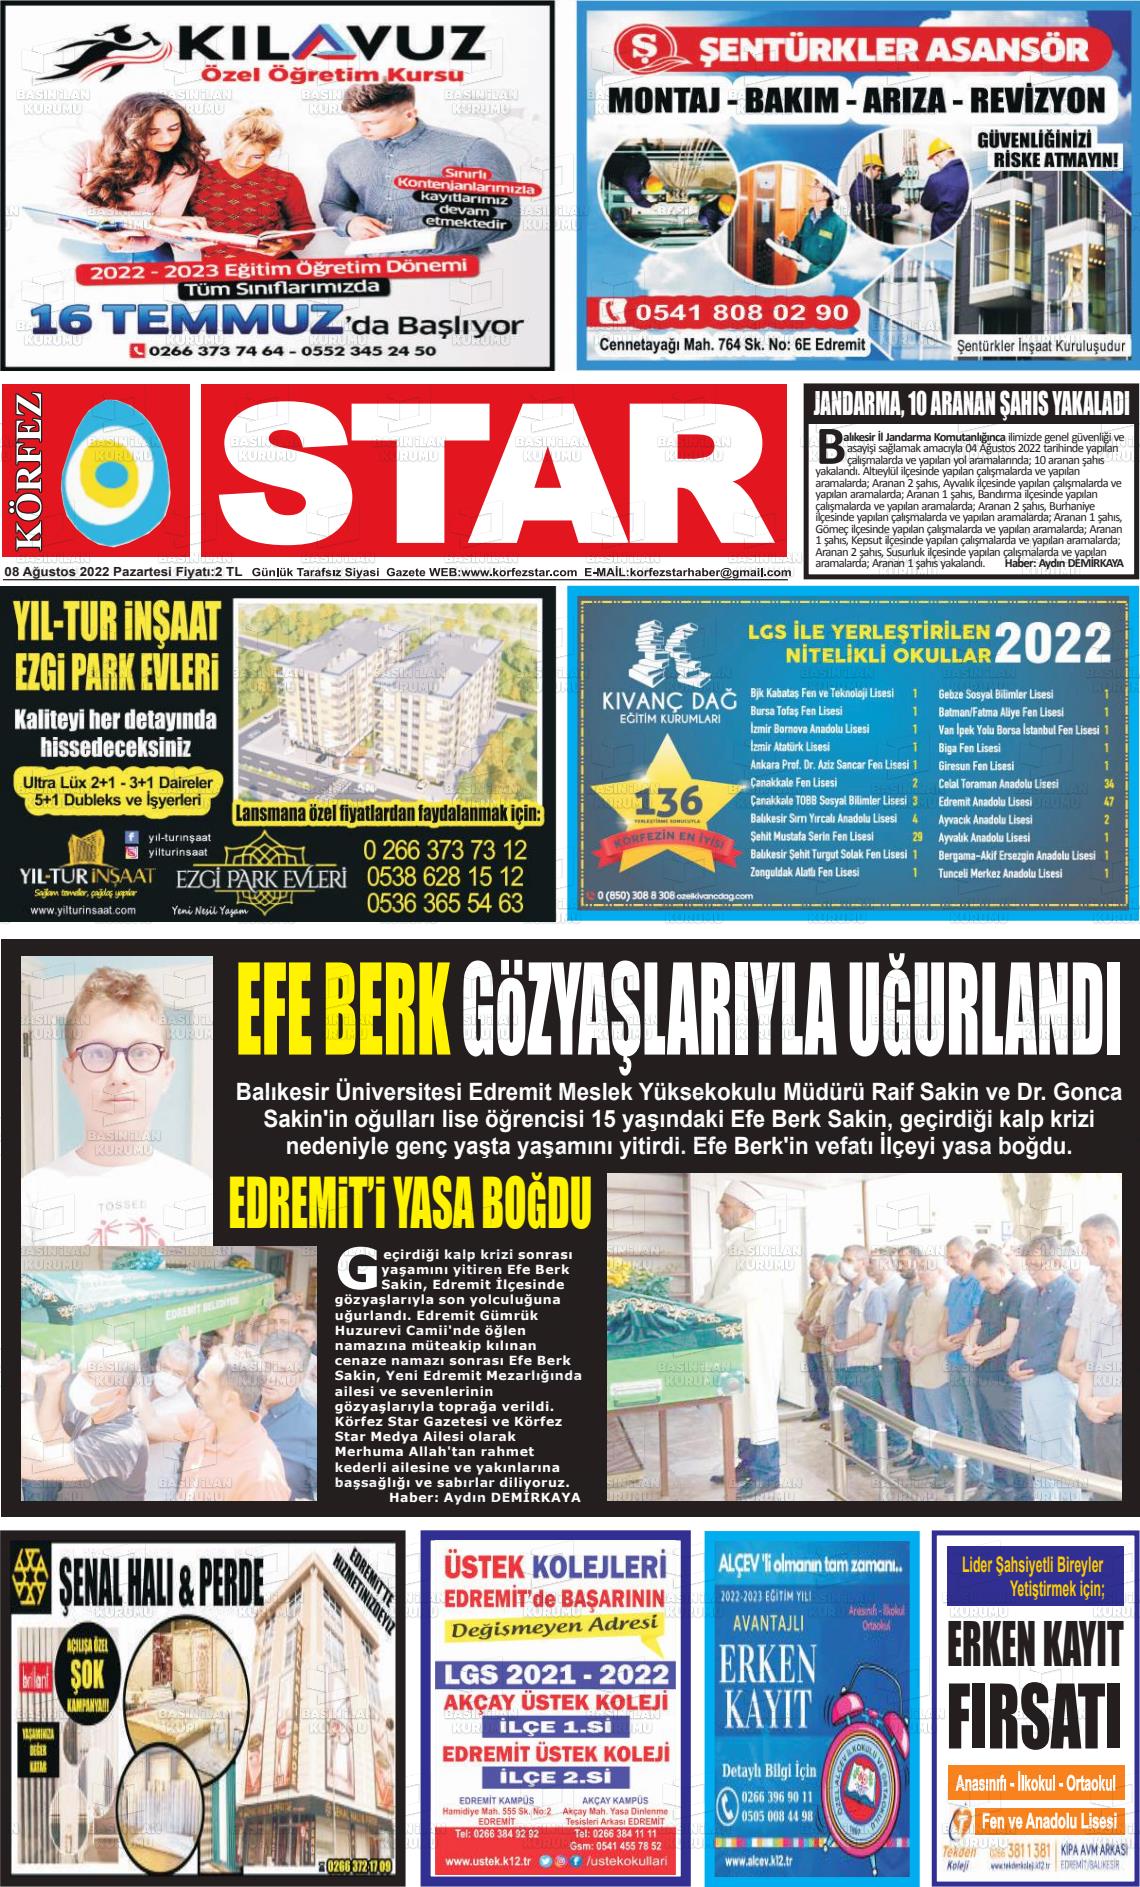 08 Ağustos 2022 Körfez Star Gazete Manşeti